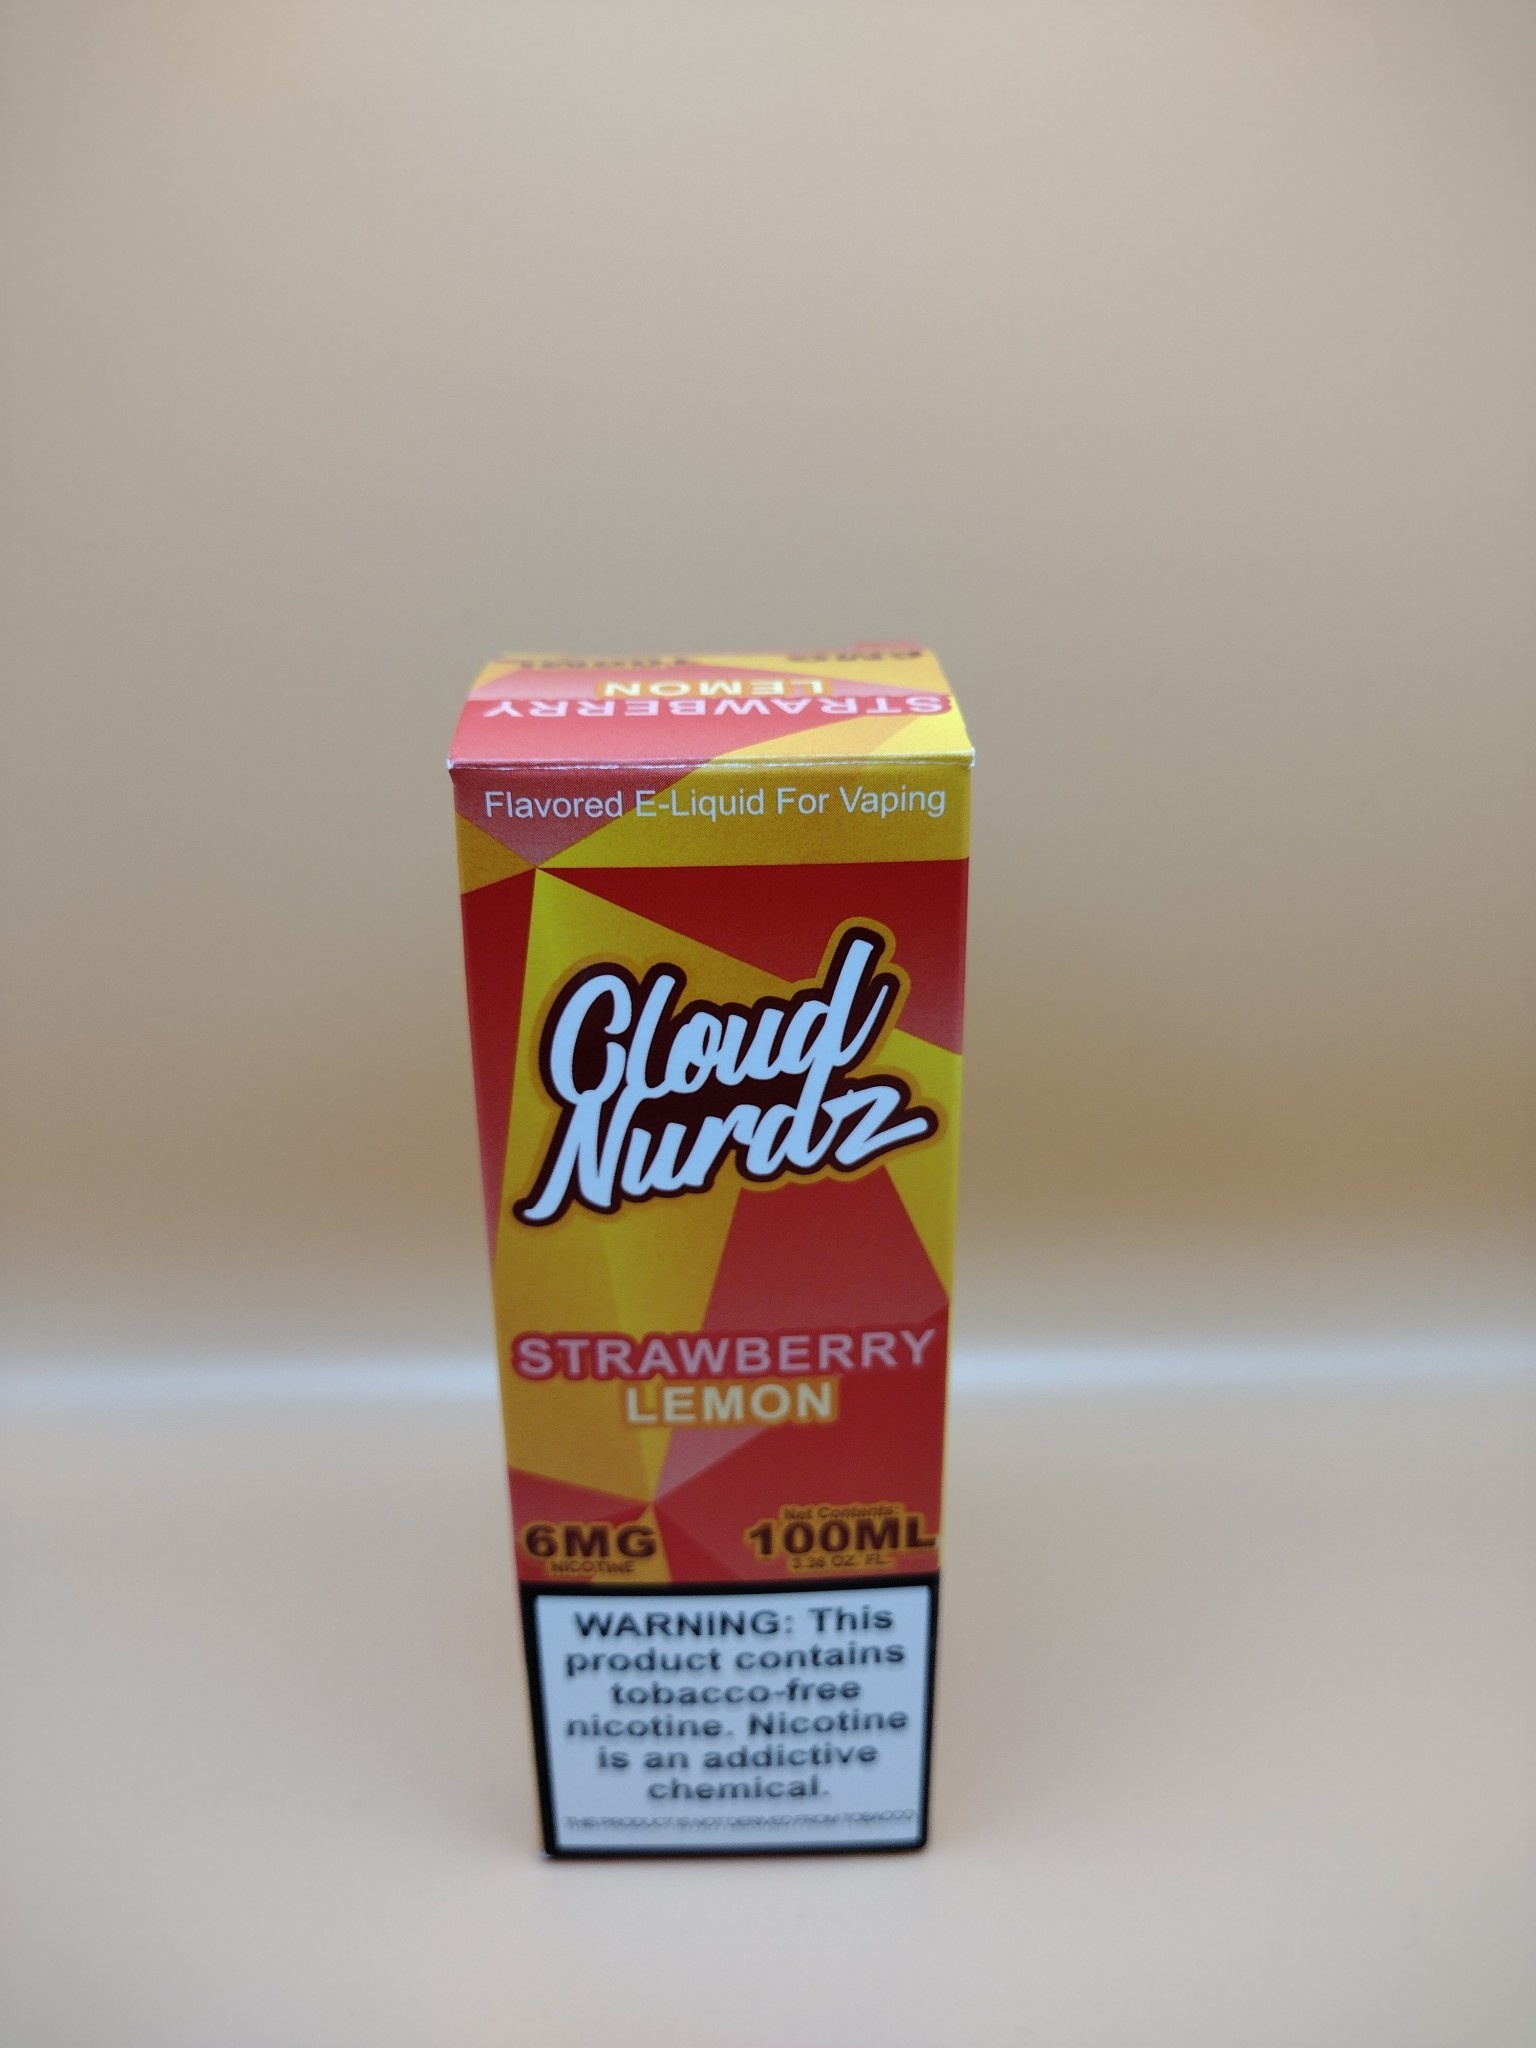 Cloud Nurdz Cloud Nurdz - Strawberry Lemon 6mg